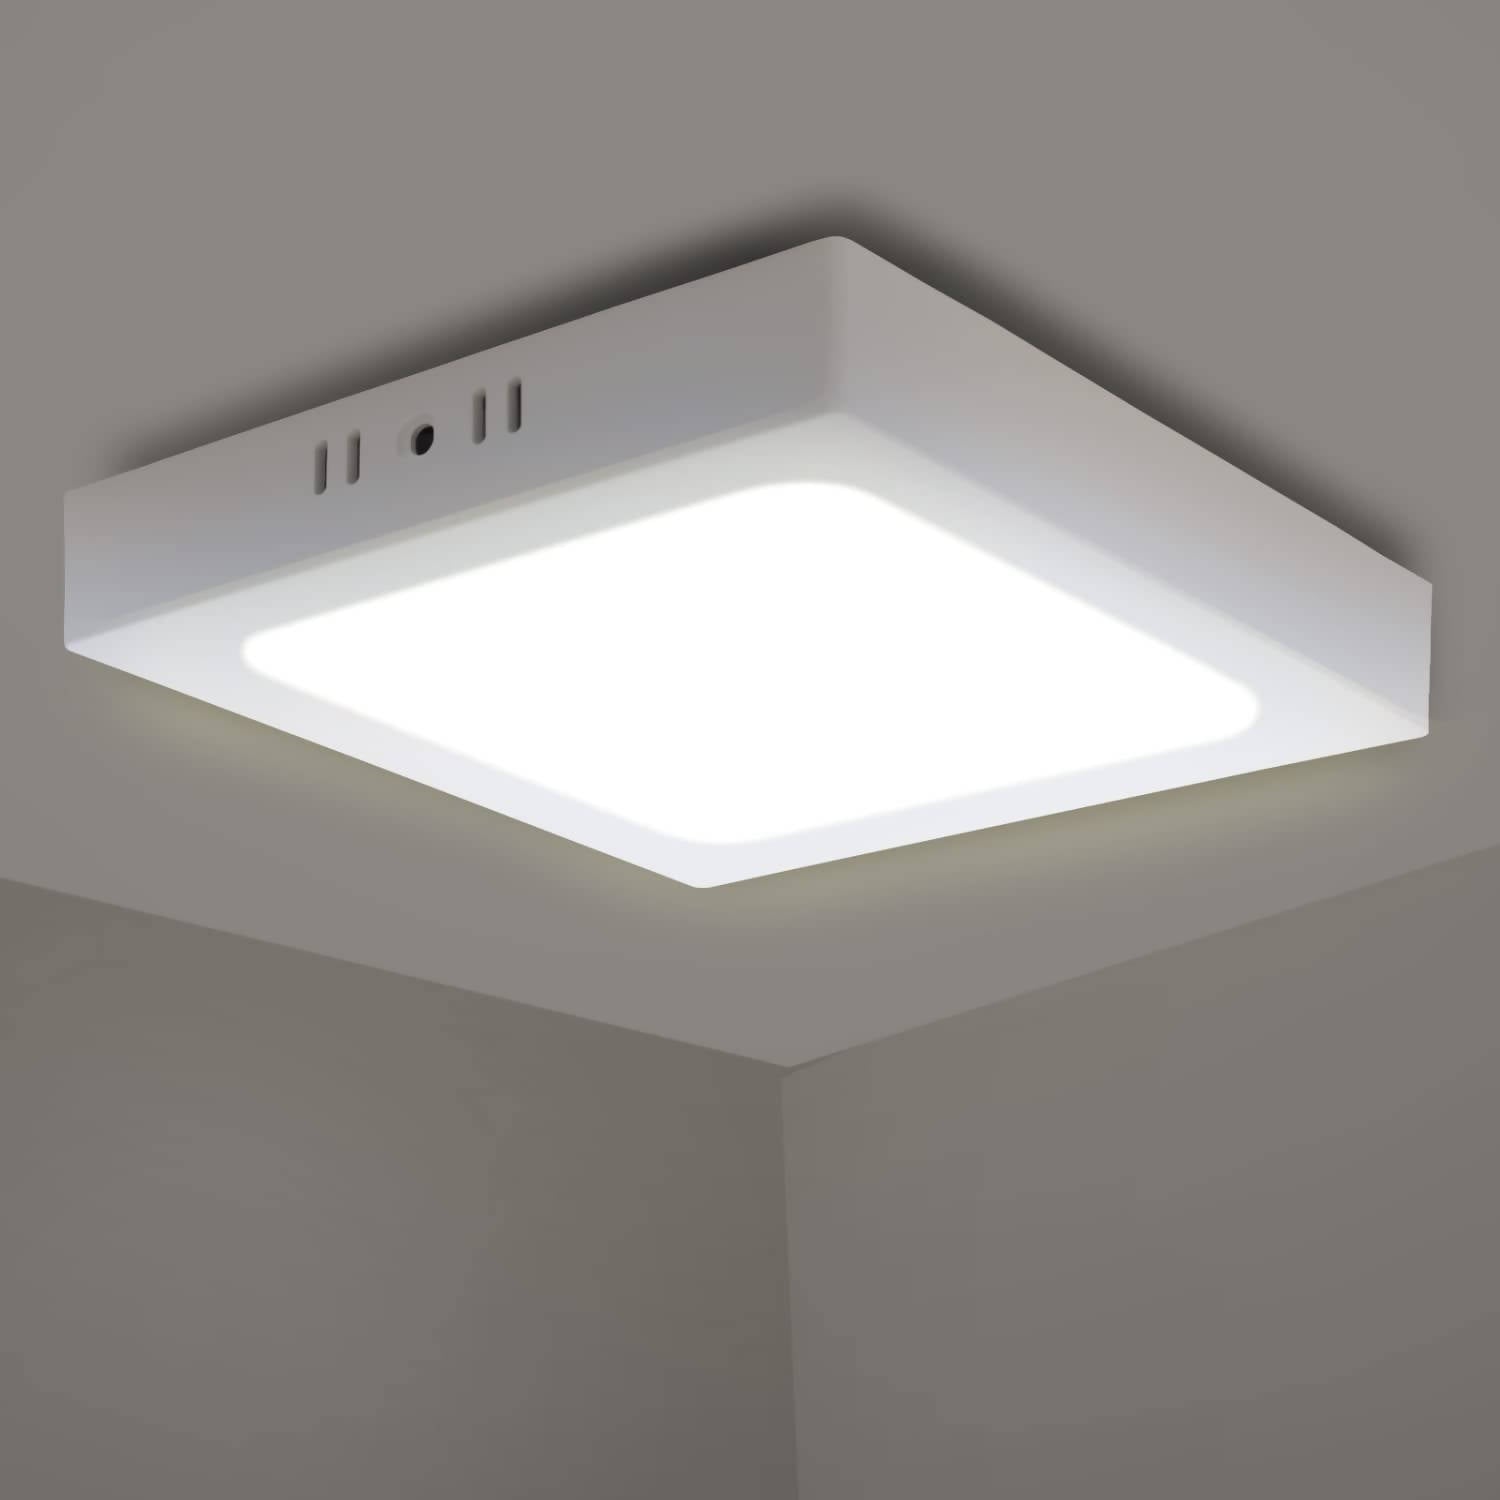 Aigostar LED Ceiling Light 12 W Ceiling Light, 4000 K Neutral White 960 lm Bathroom Lamp Ideal for Bathroom Balcony Hallway Kitchen Living Room Bathroom Lamp D173 x H 35 mm [Energy Class A+]